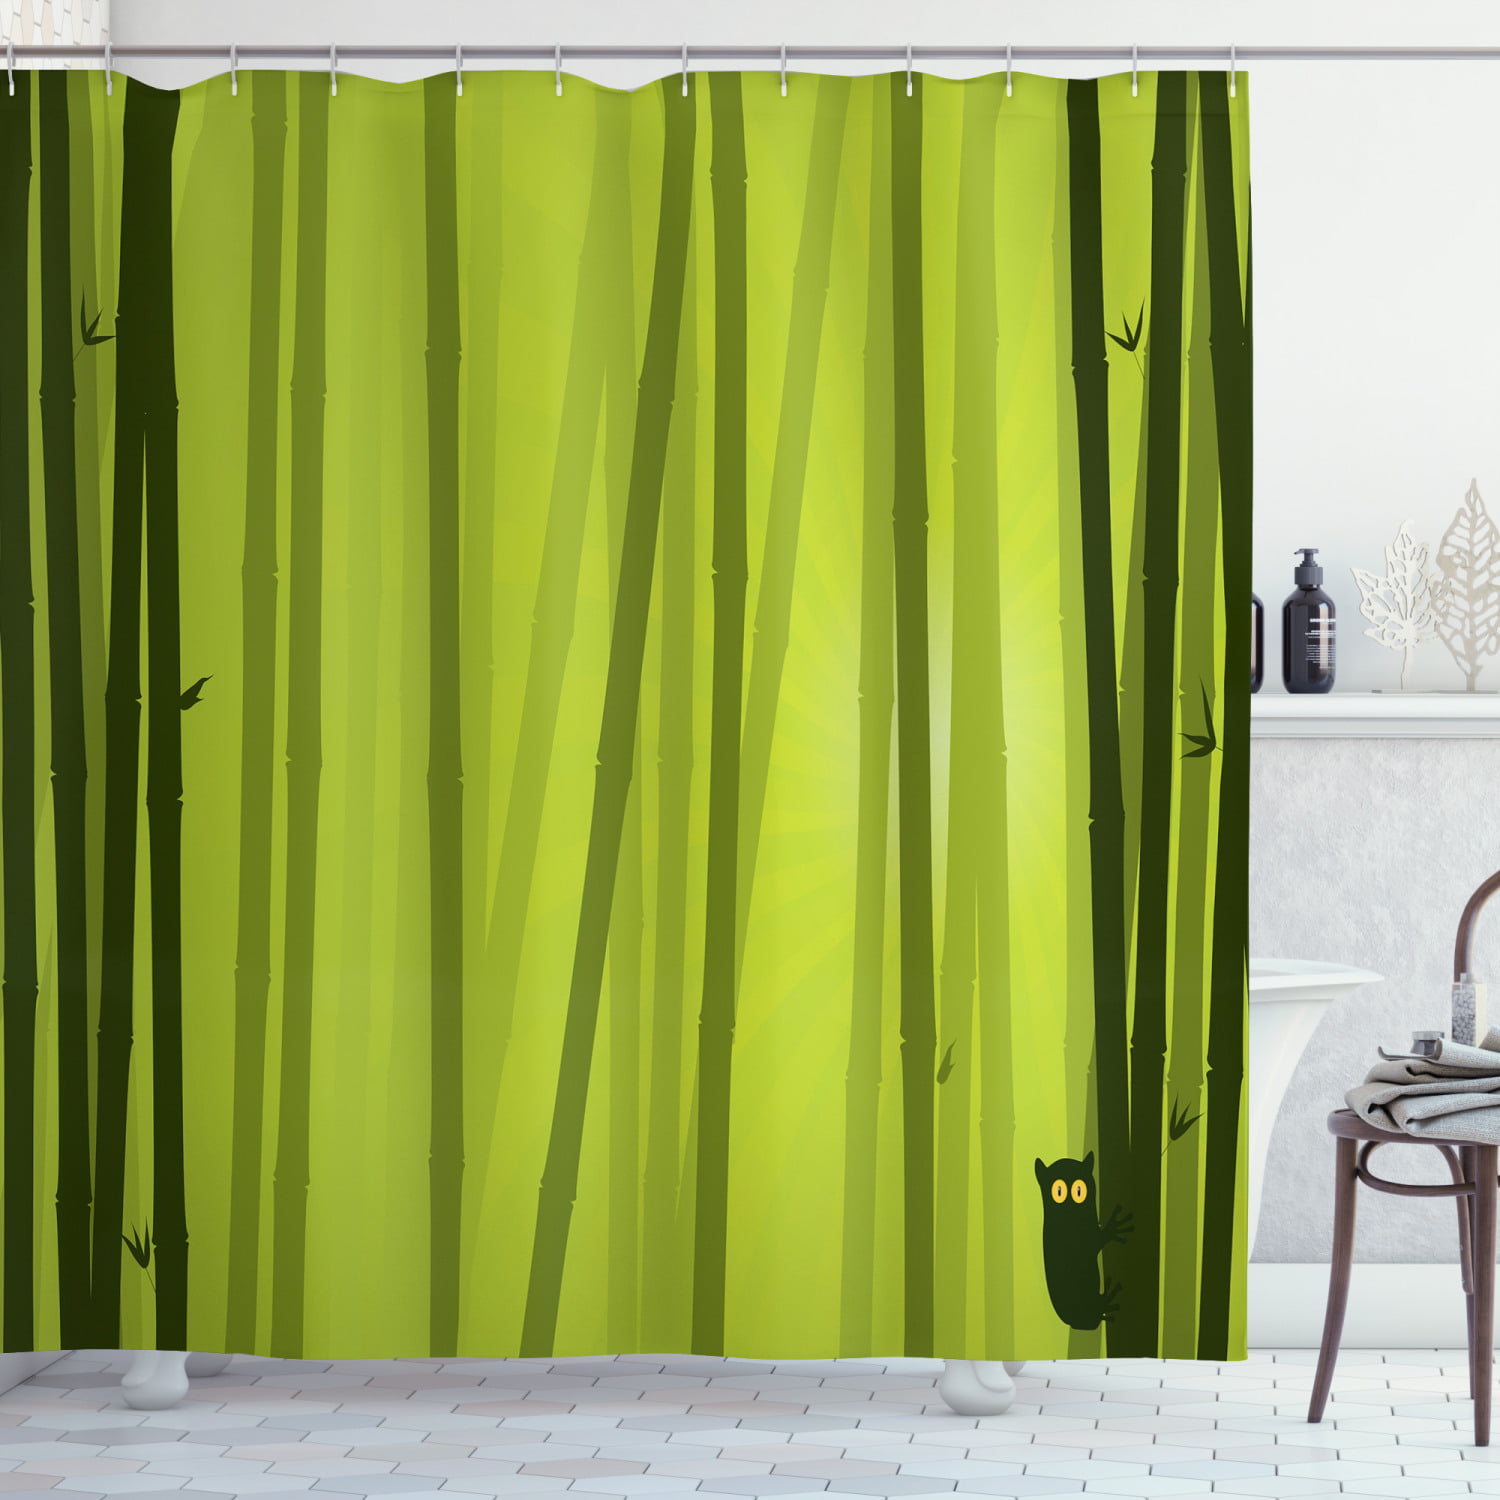 Bamboo Eye Protection Green Shower Curtain Polyester Waterproof Bathroom Decor 